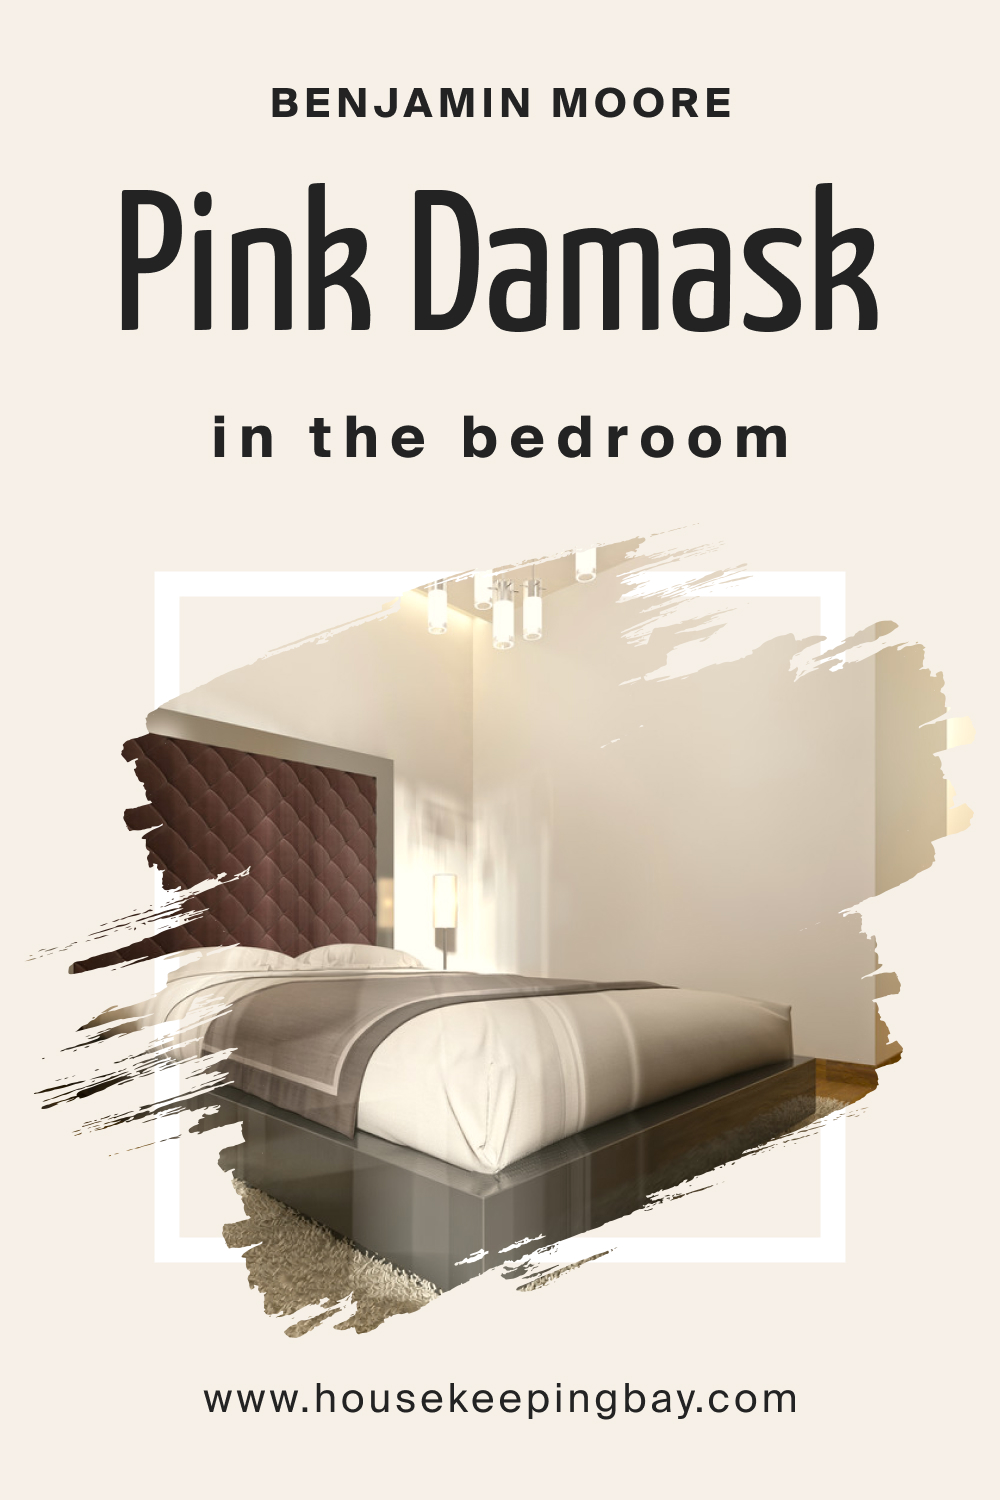 Benjamin Moore. Pink Damask OC 72 for the Bedroom